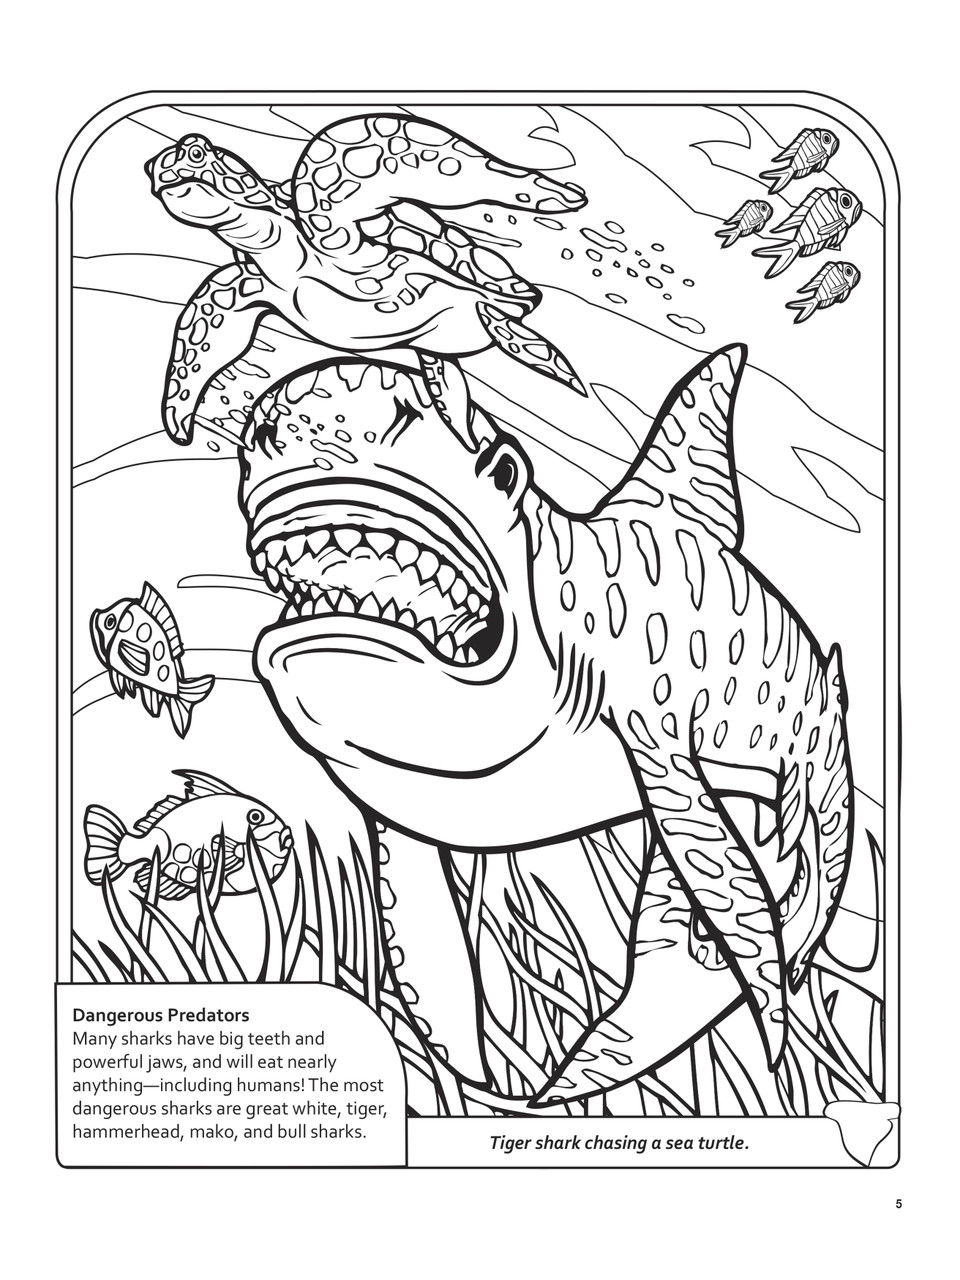 Sharks coloring book db